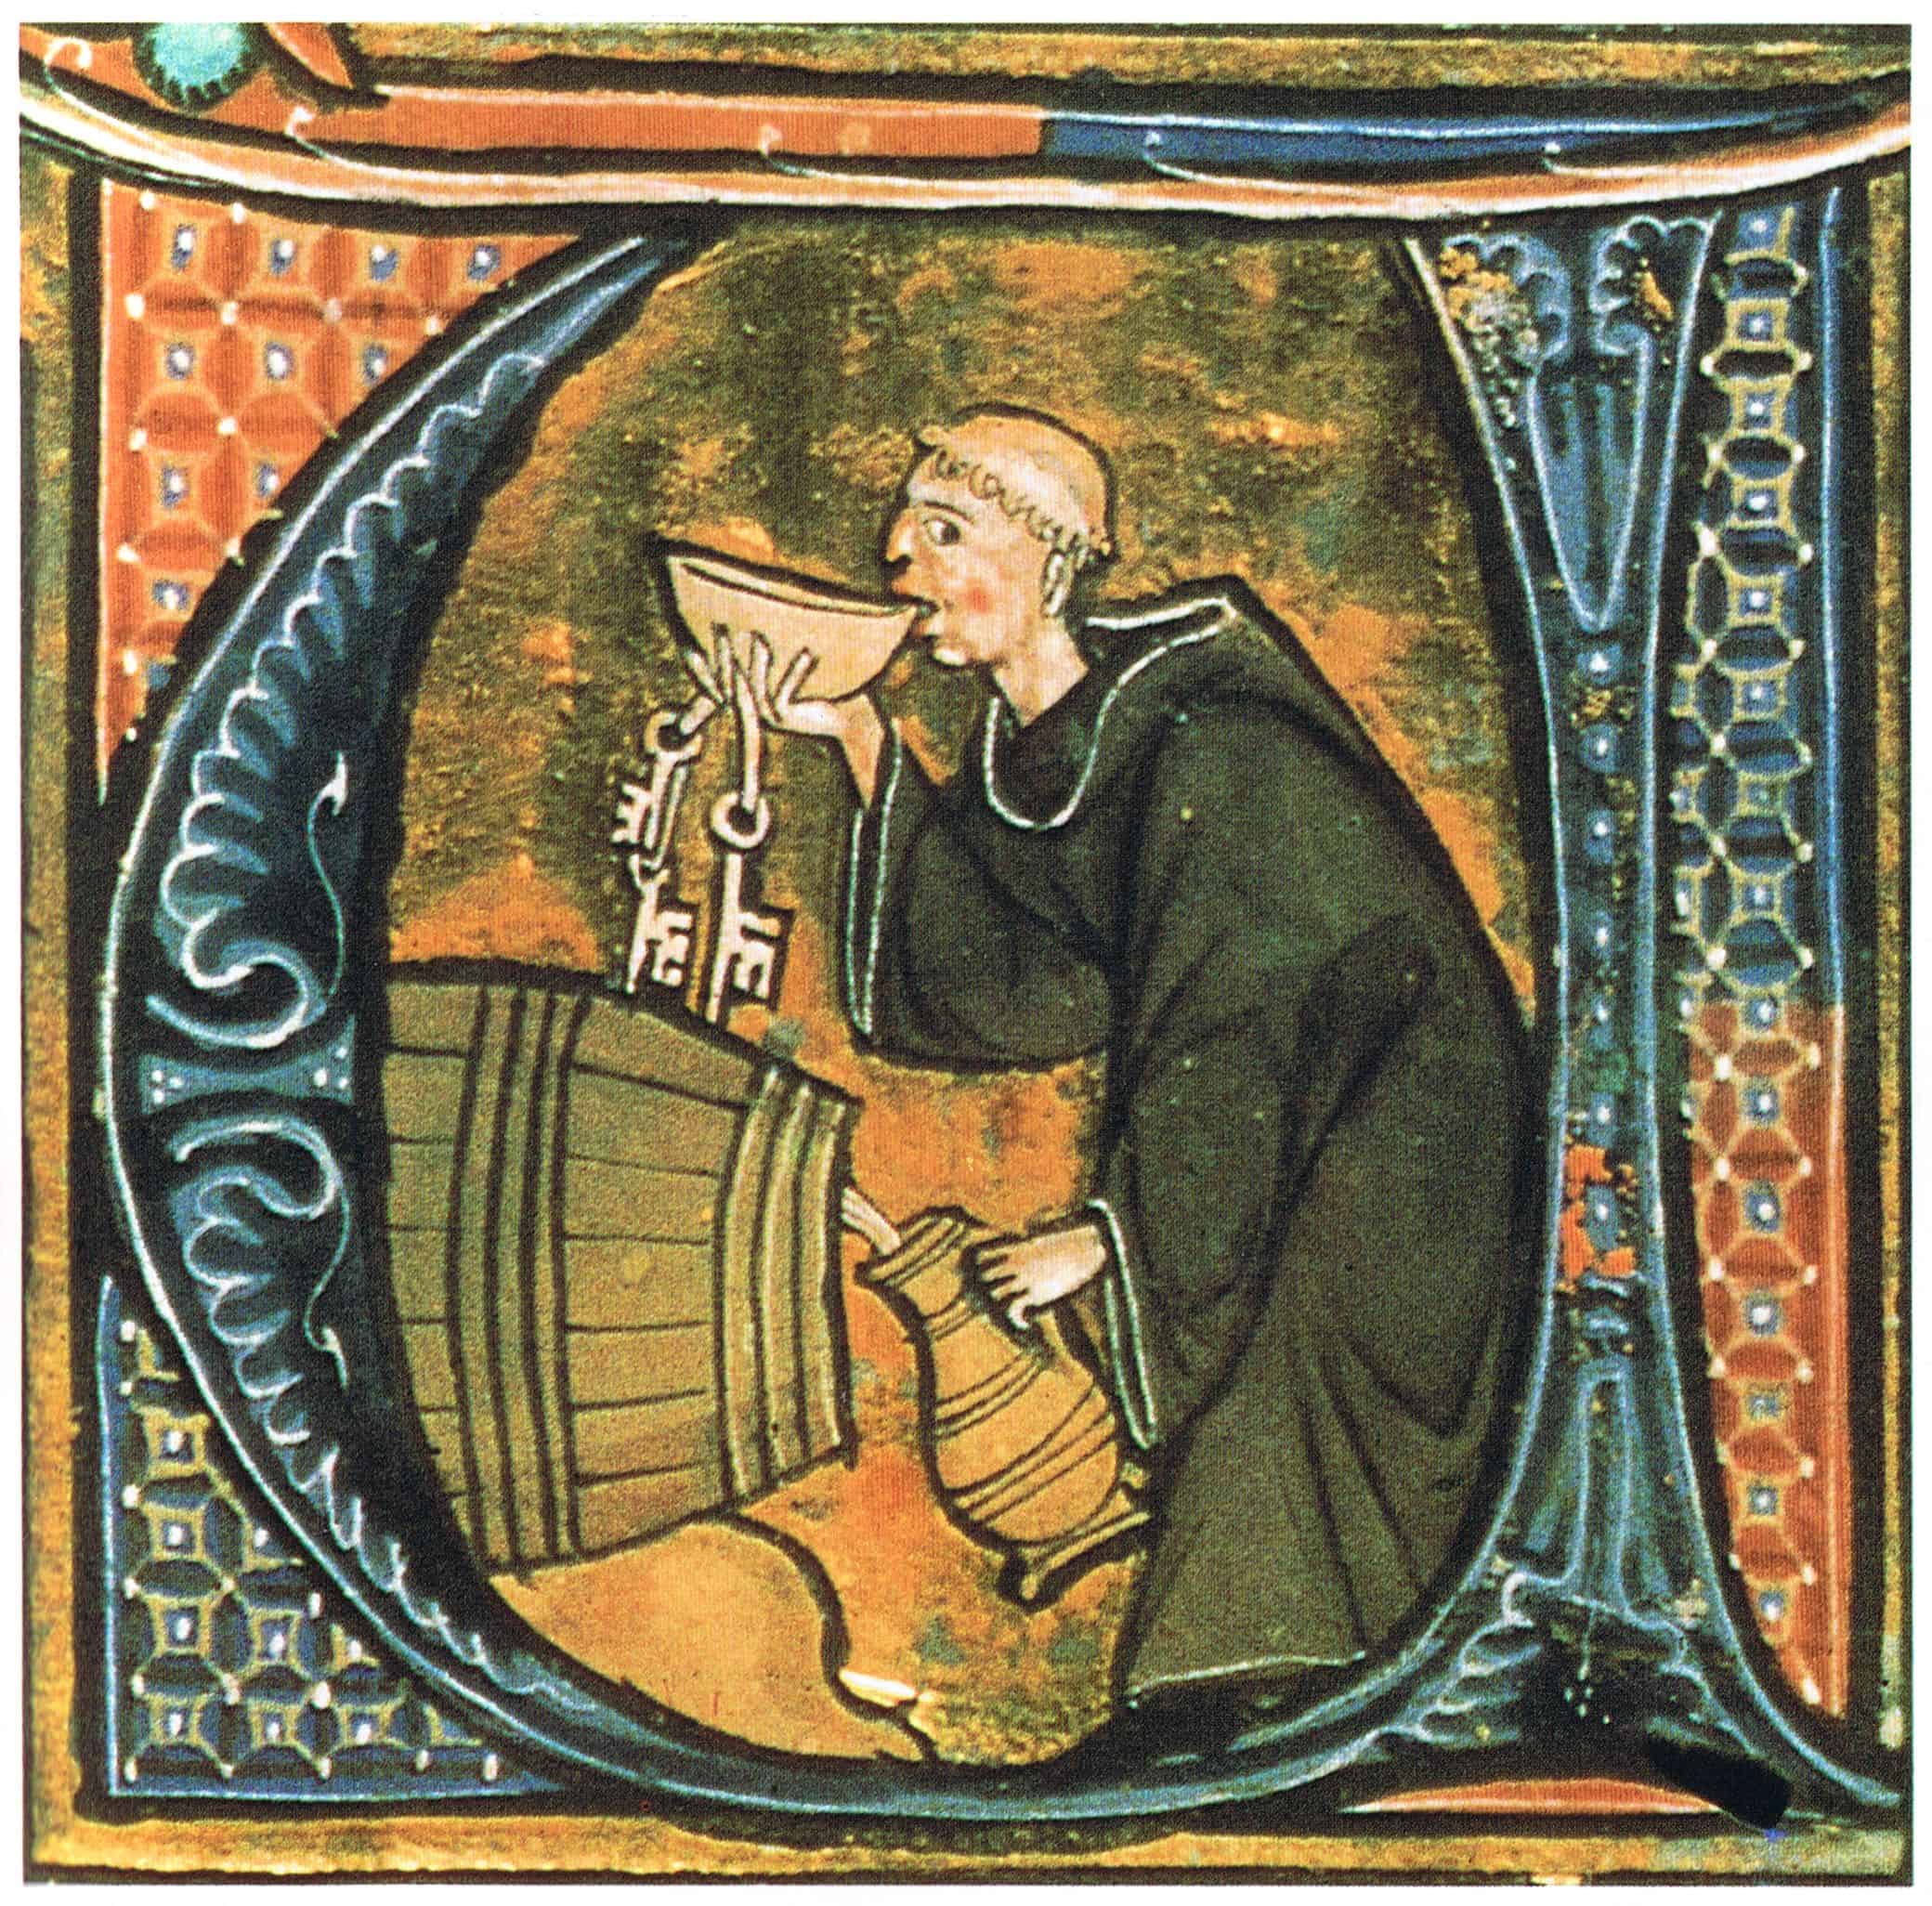 Miniatura de Bernardo de clairvaux del ano 1.267.